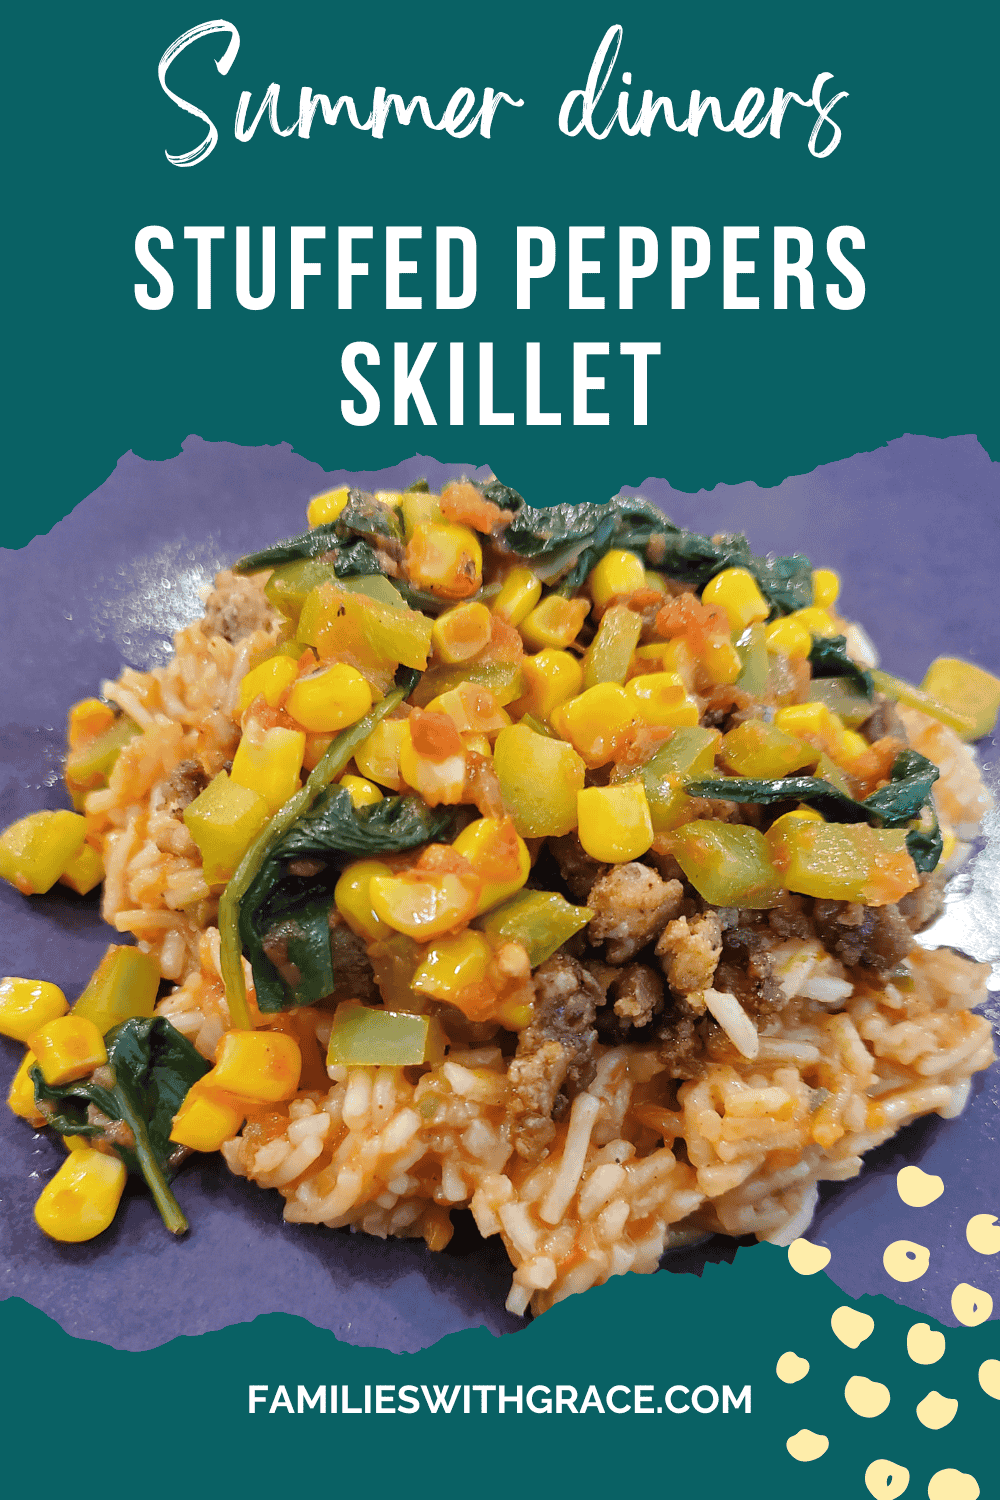 Stuffed peppers skillet recipe